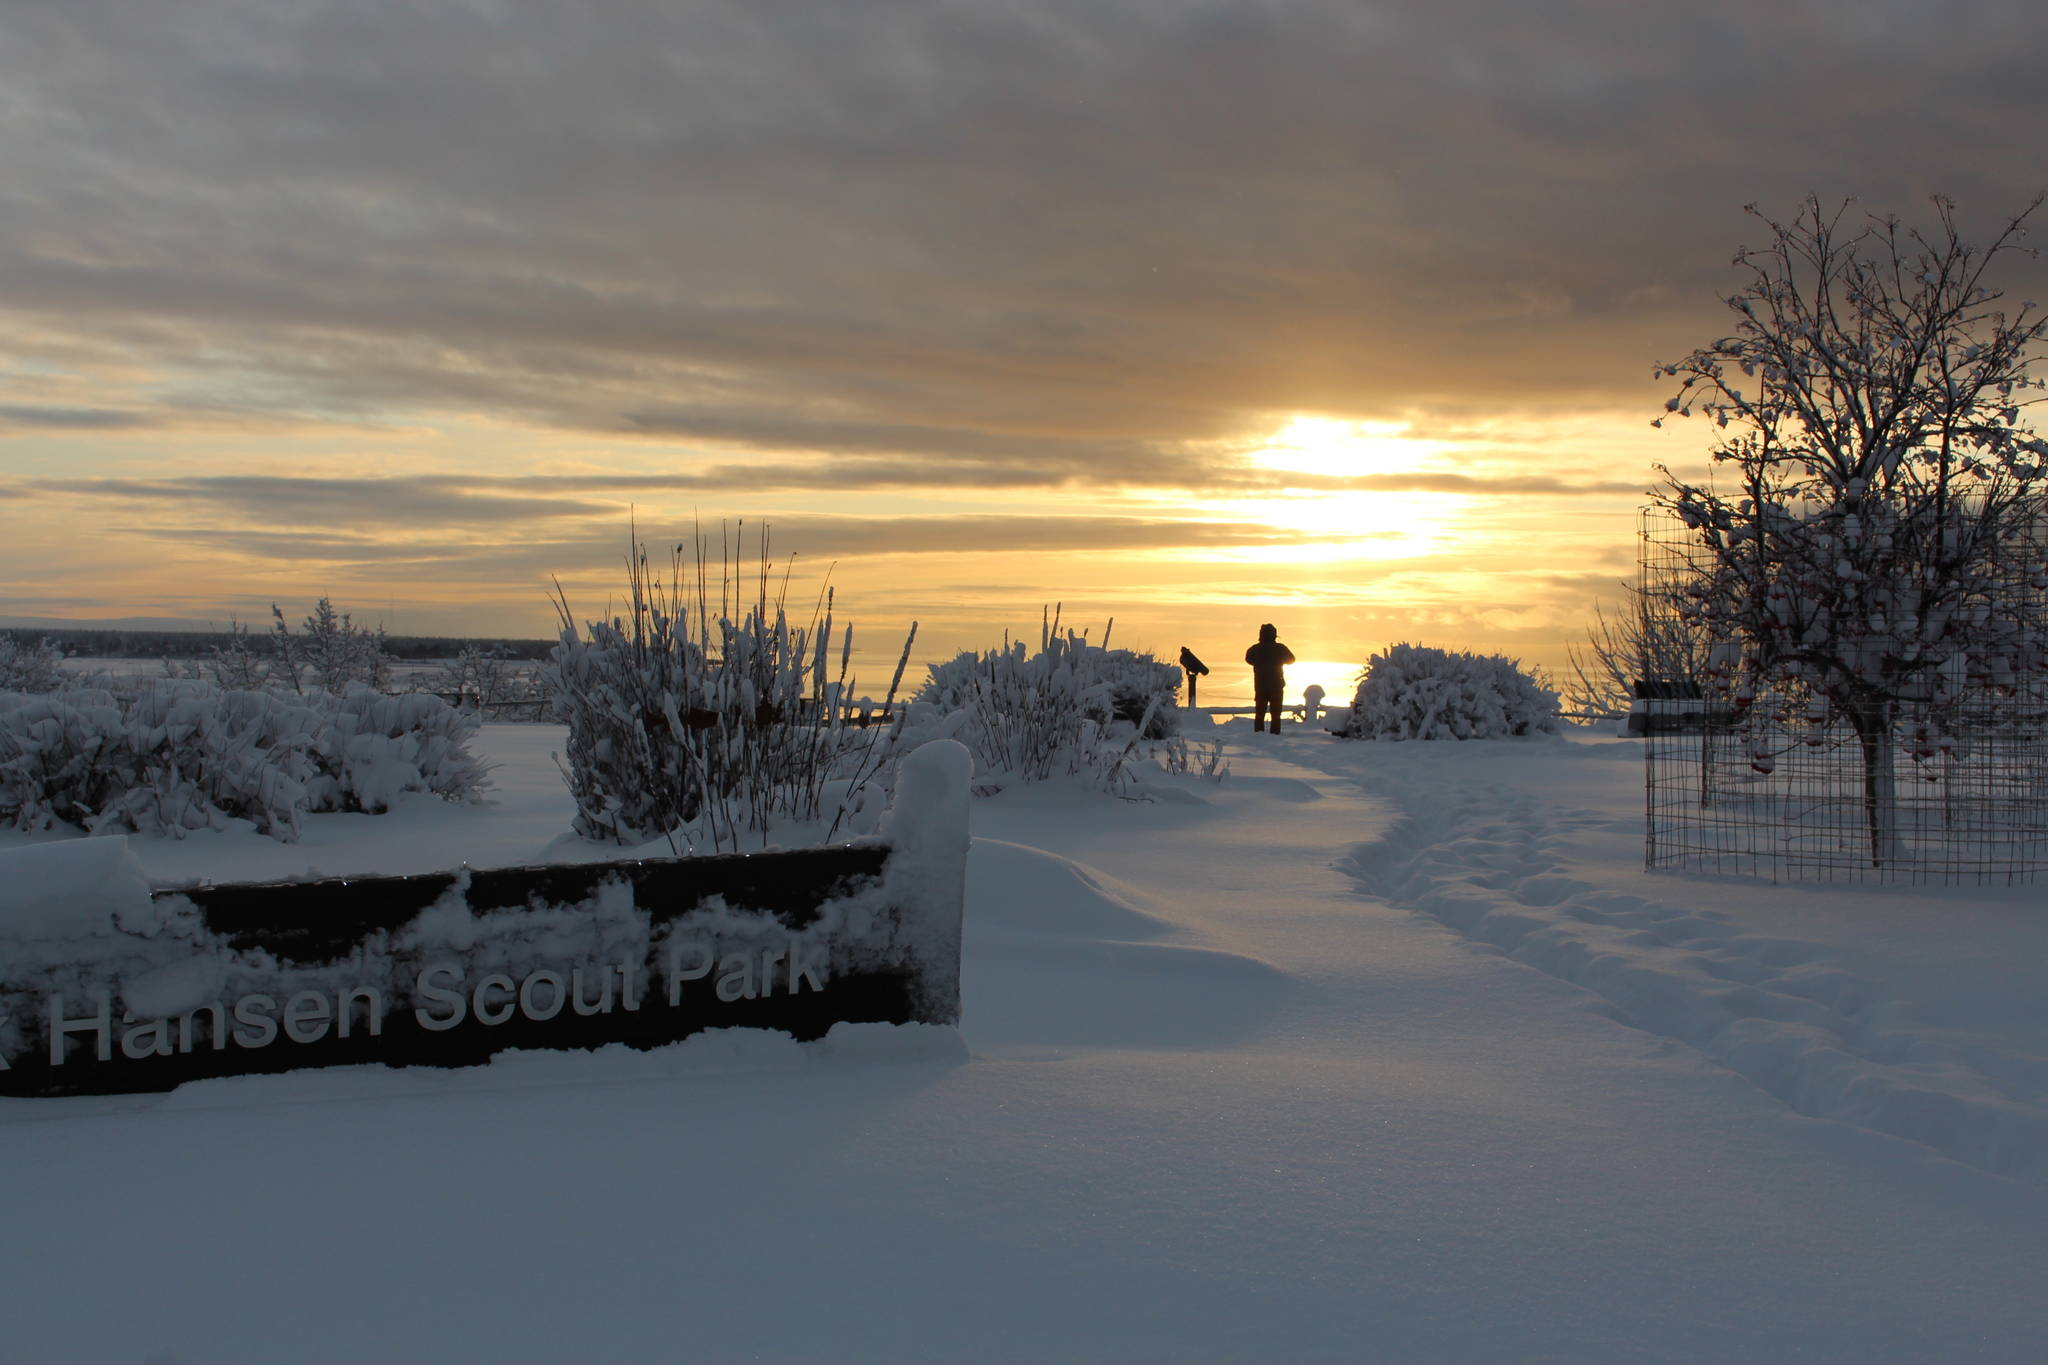 Erik Hansen Scout Park can be seen here in Kenai, Alaska on Dec. 3, 2019. (Photo by Brian Mazurek/Peninsula Clarion)